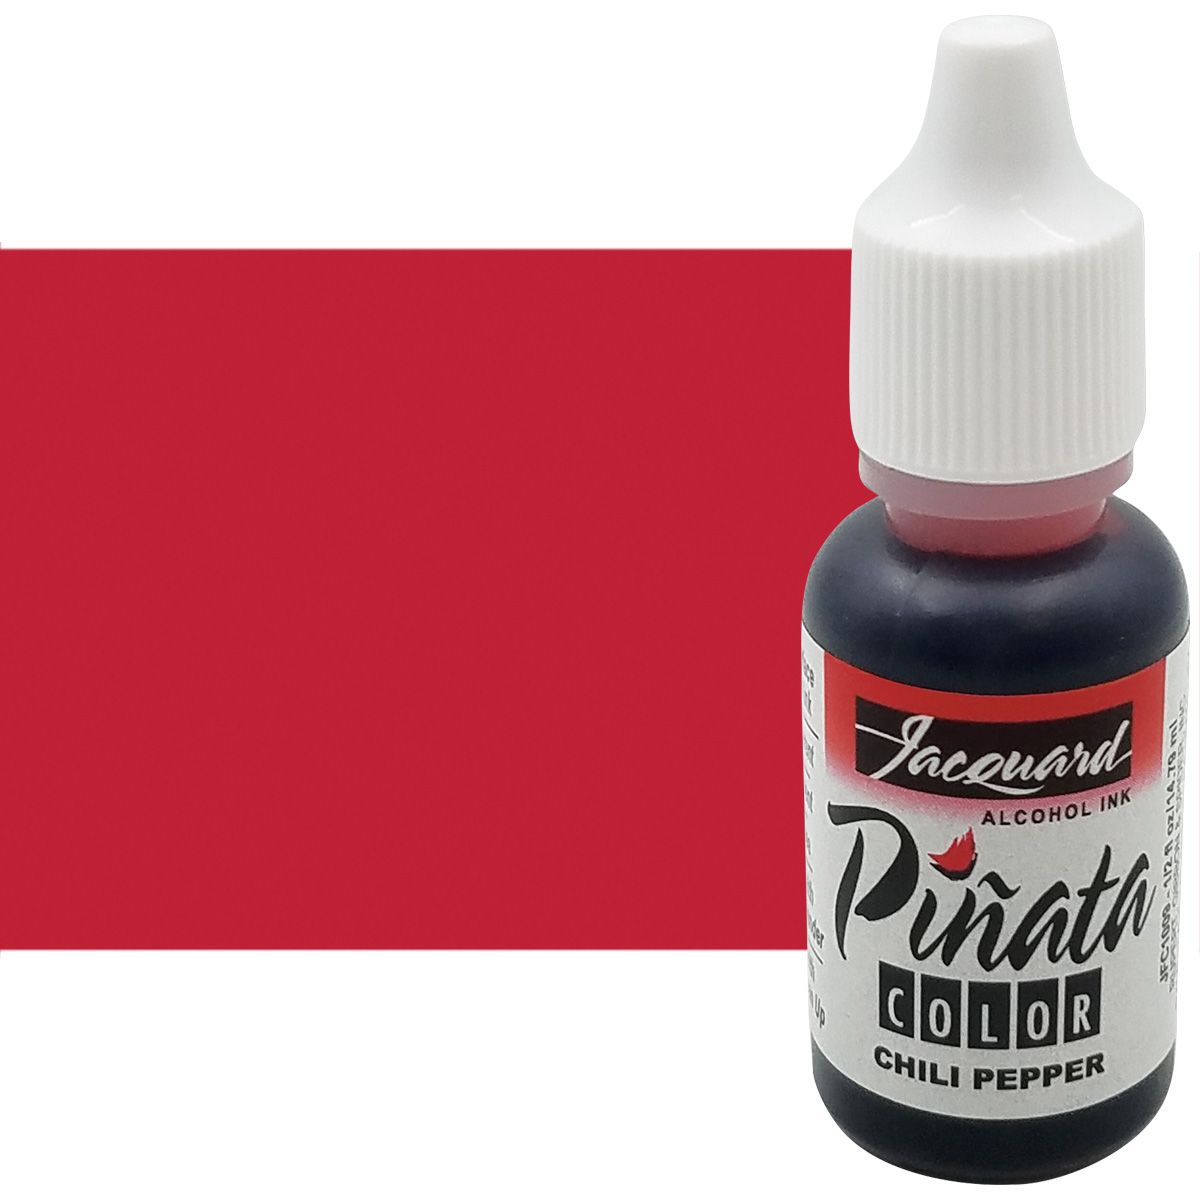 Jacquard Pinata Alcohol Ink - Chili Pepper, 1/2oz